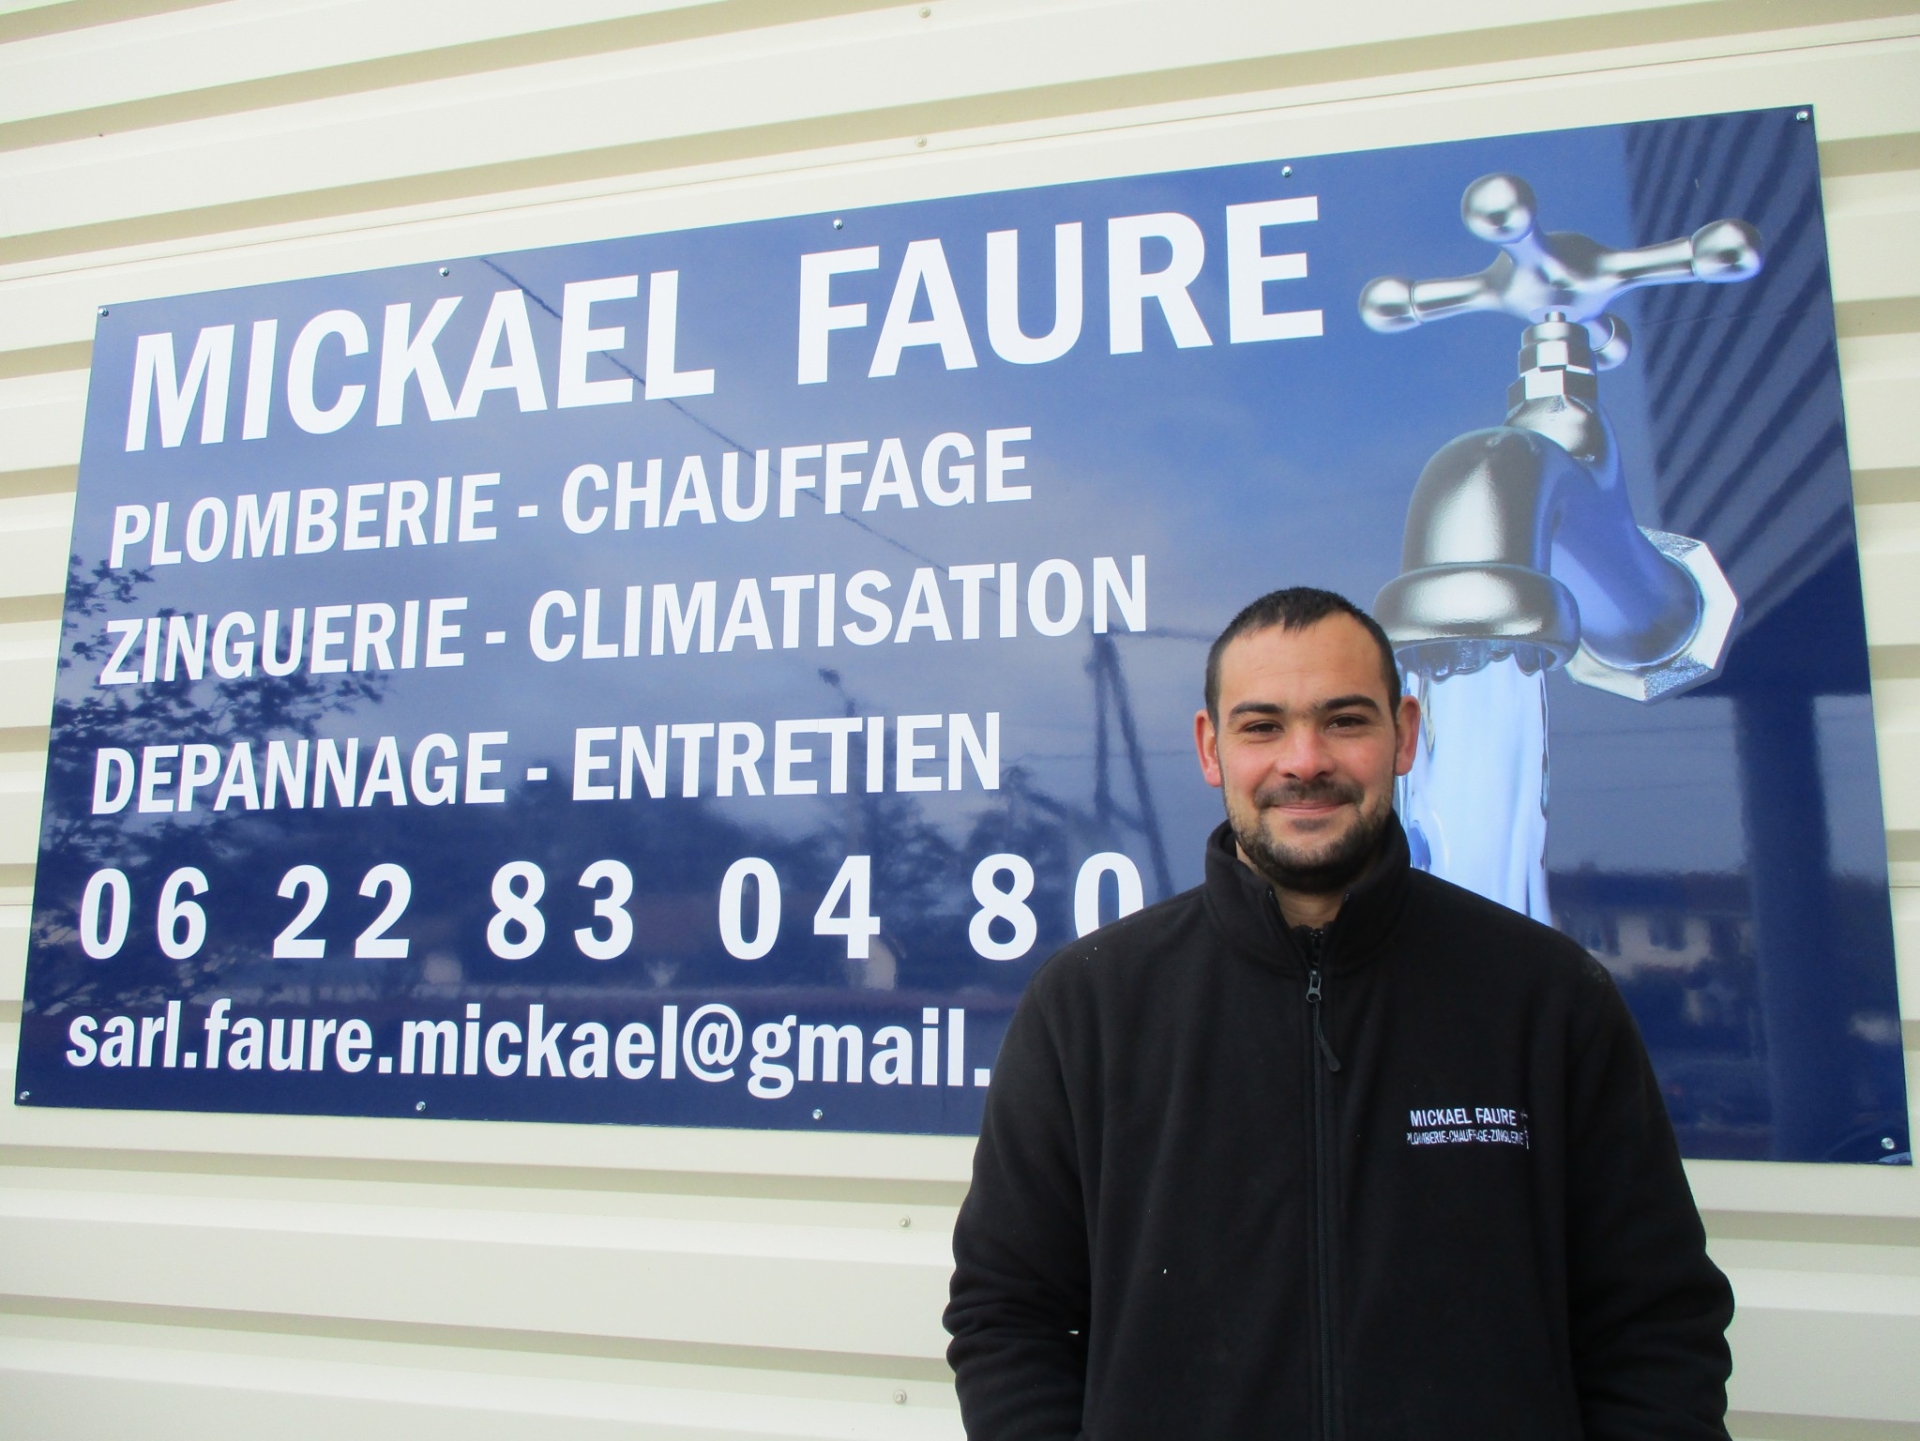 Mickael Faure Plomberie, une histoire de passion